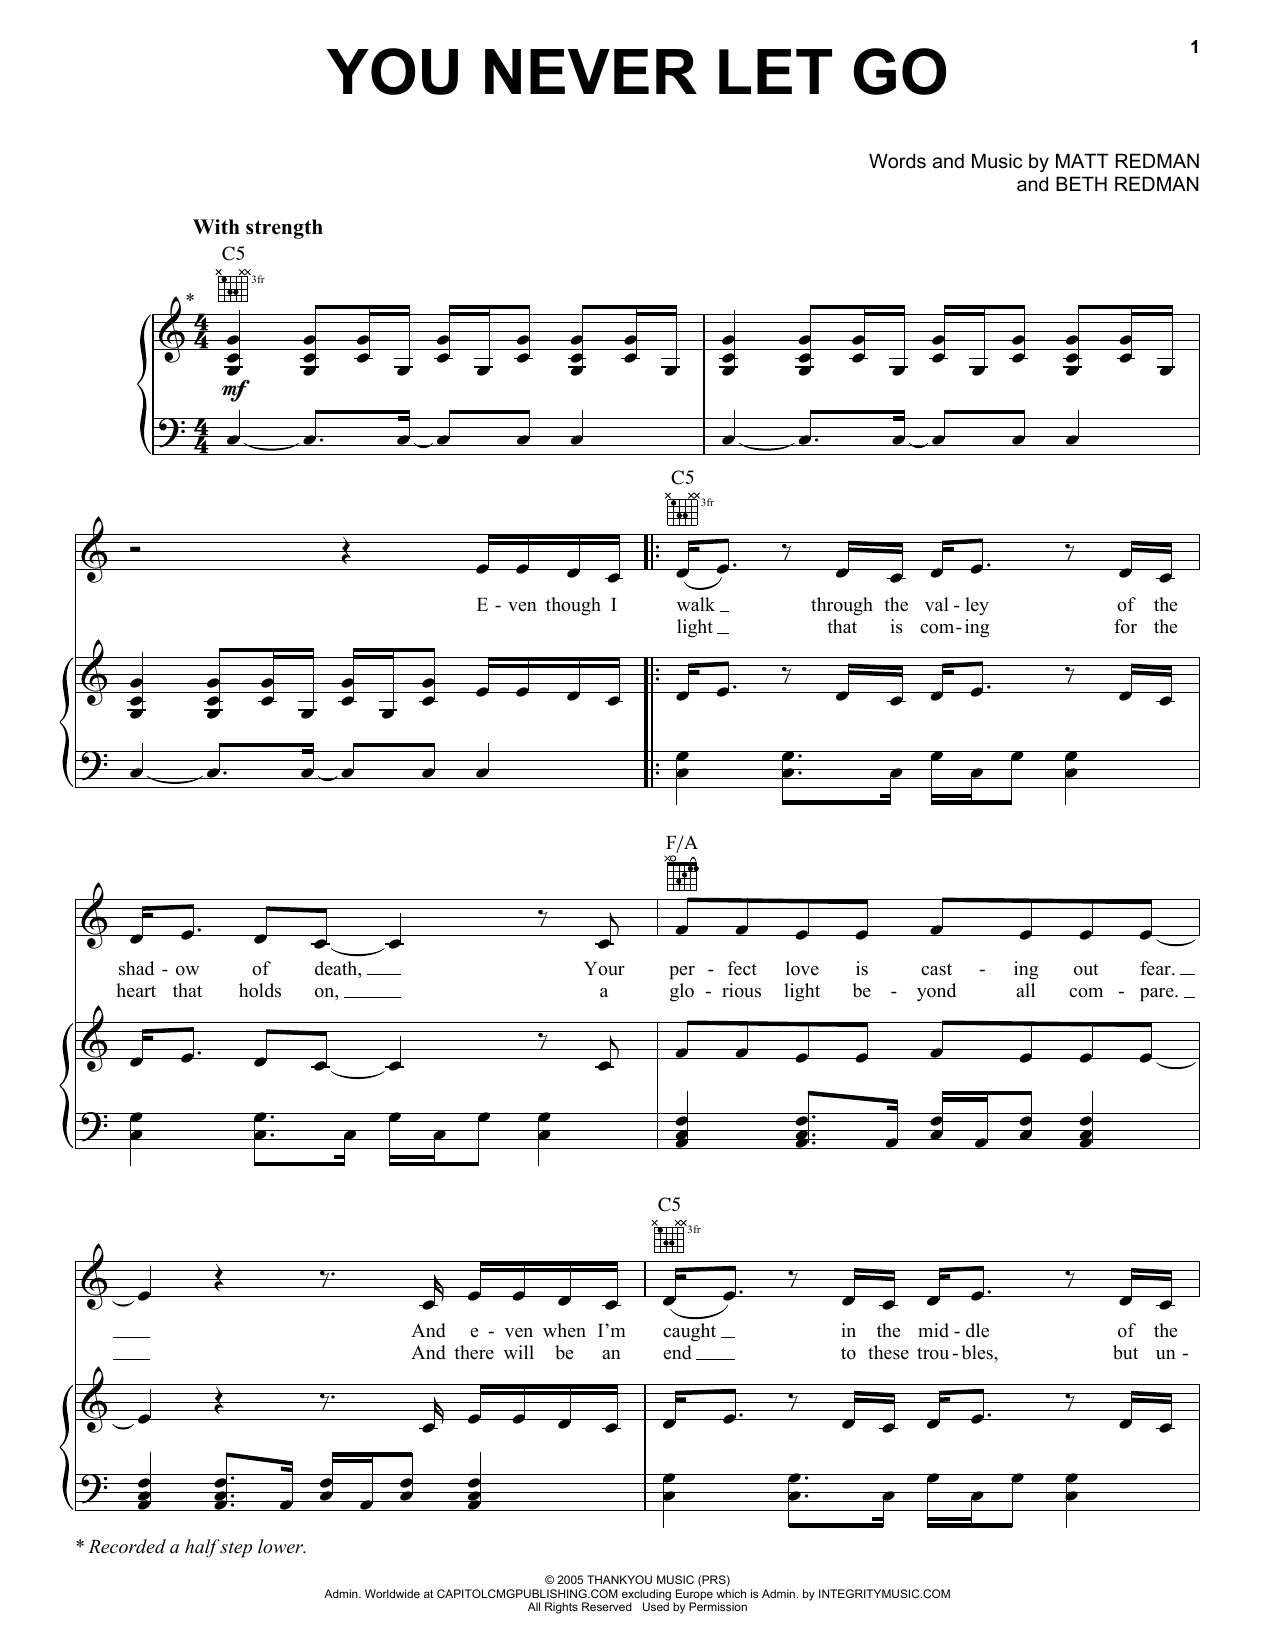 Matt Redman You Never Let Go Sheet Music Notes & Chords for Easy Guitar Tab - Download or Print PDF